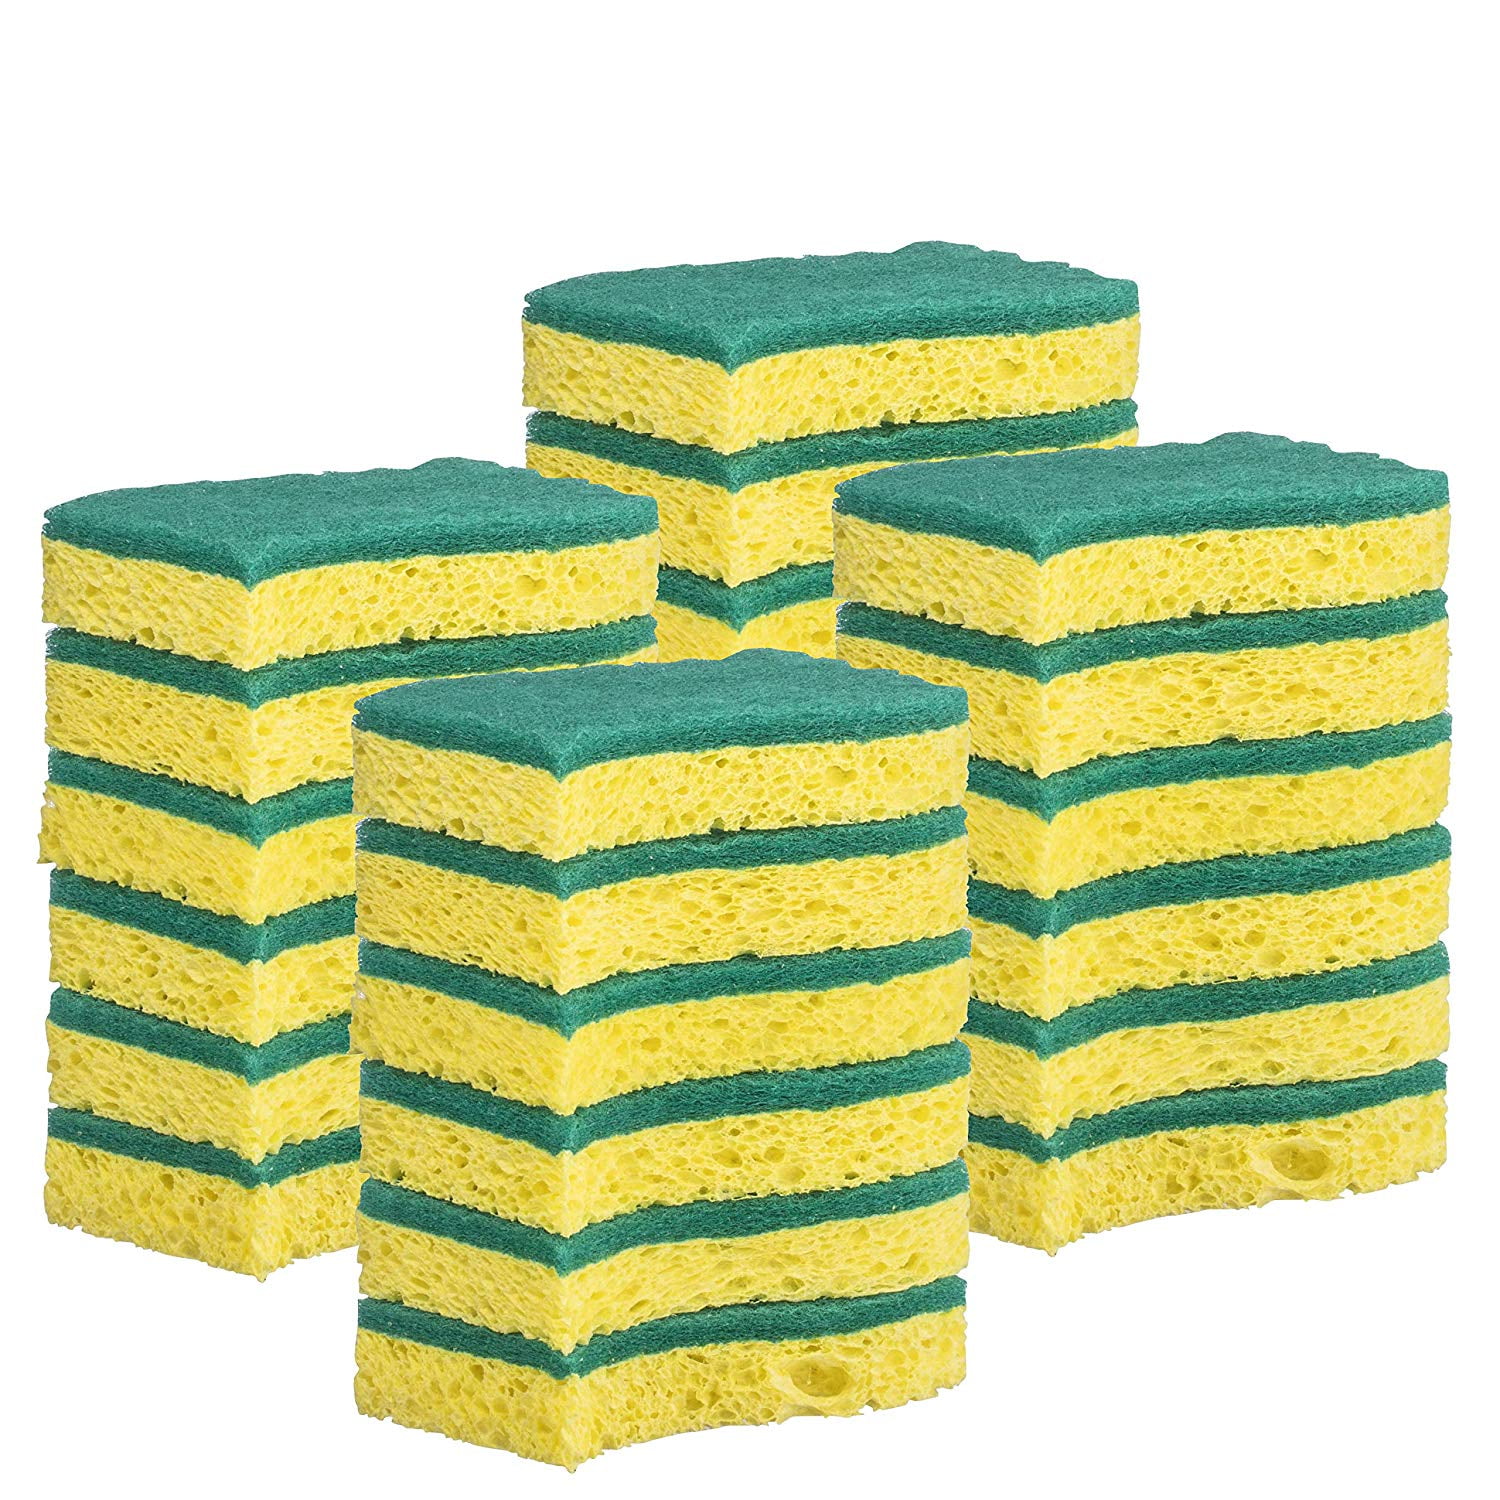 11x6cm - Dish Sponge Non-Scratch Scrub Sponges Double-Sided Sponge for Cleaning Plates Sponge Scourers Heavy Duty Sponge - Scrubbing Sponge 24 Pcs Dishes & Removing Stains in Kitchens 